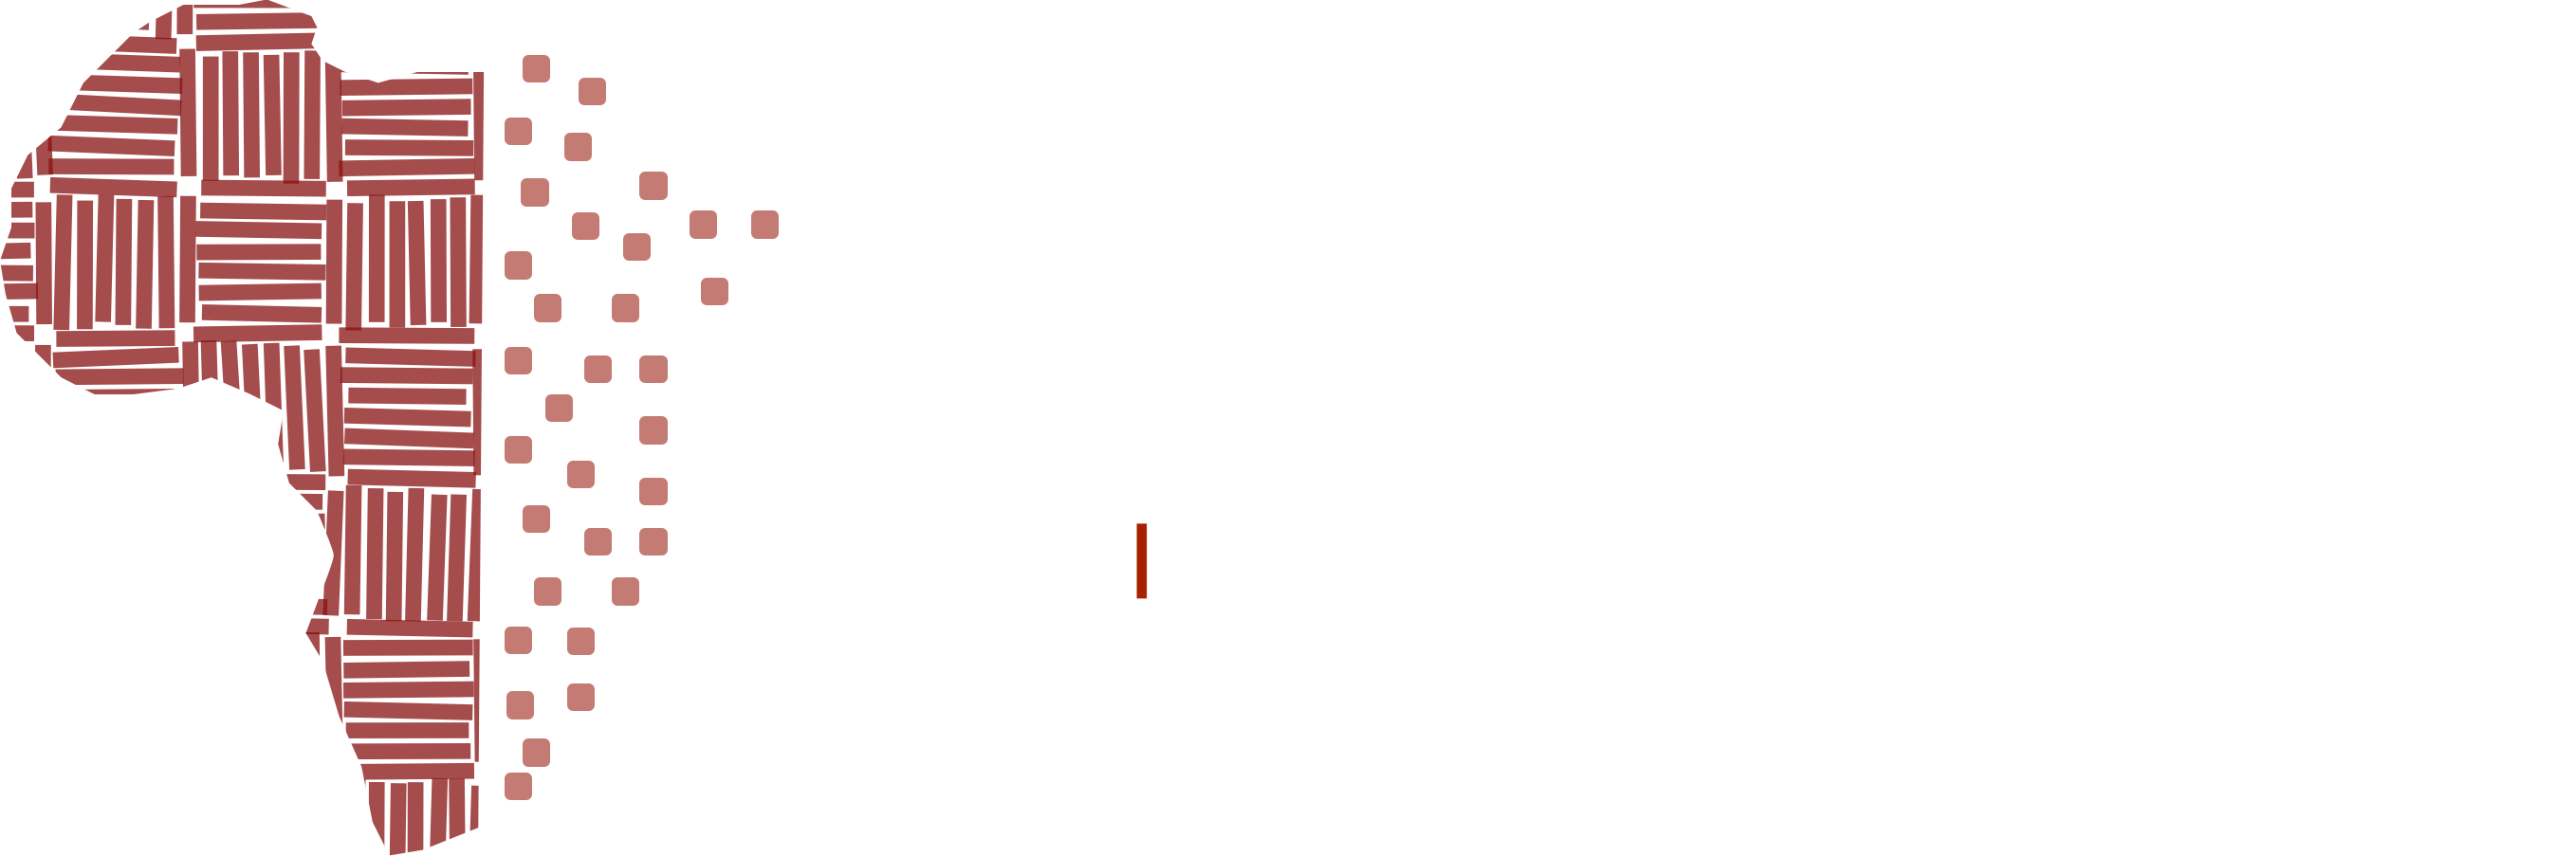 The Digital Afrikan